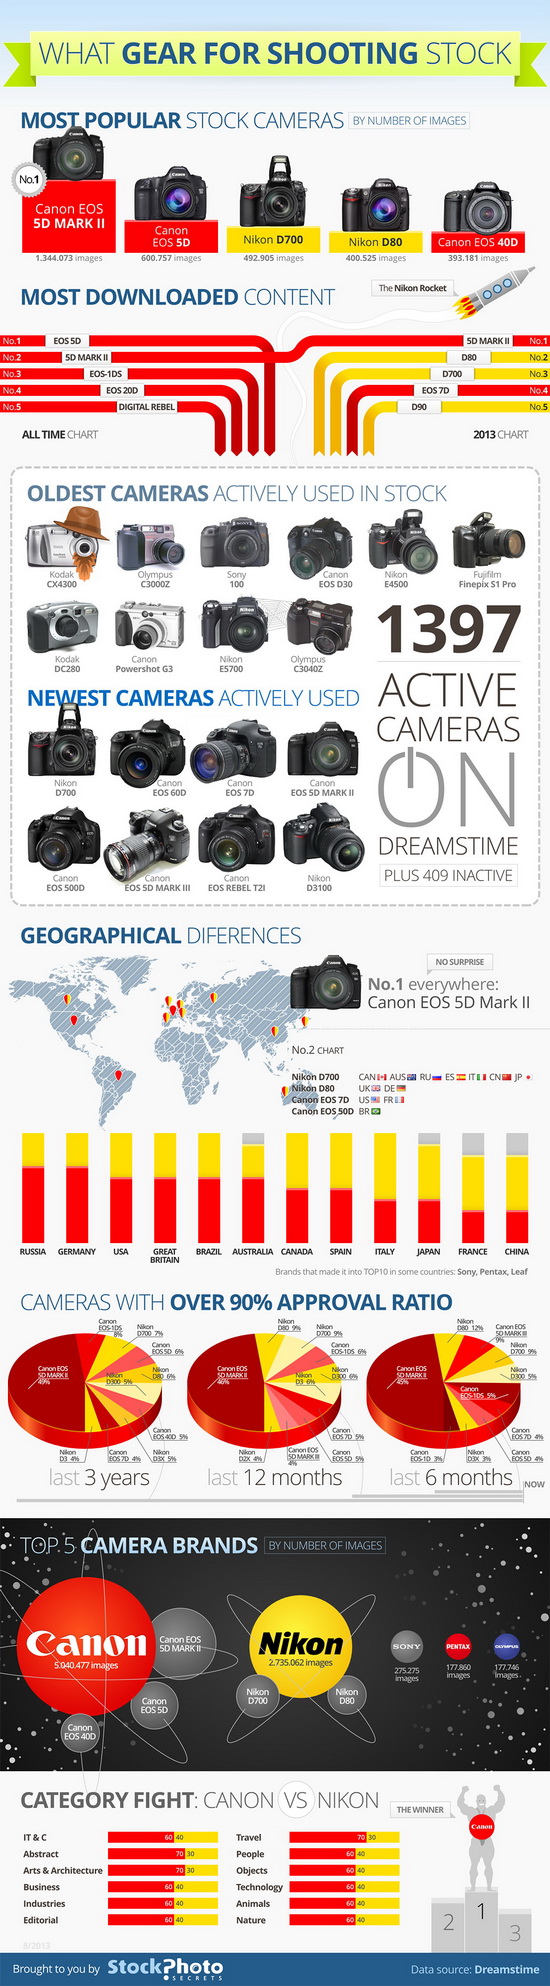 Most Popular Camera Brands